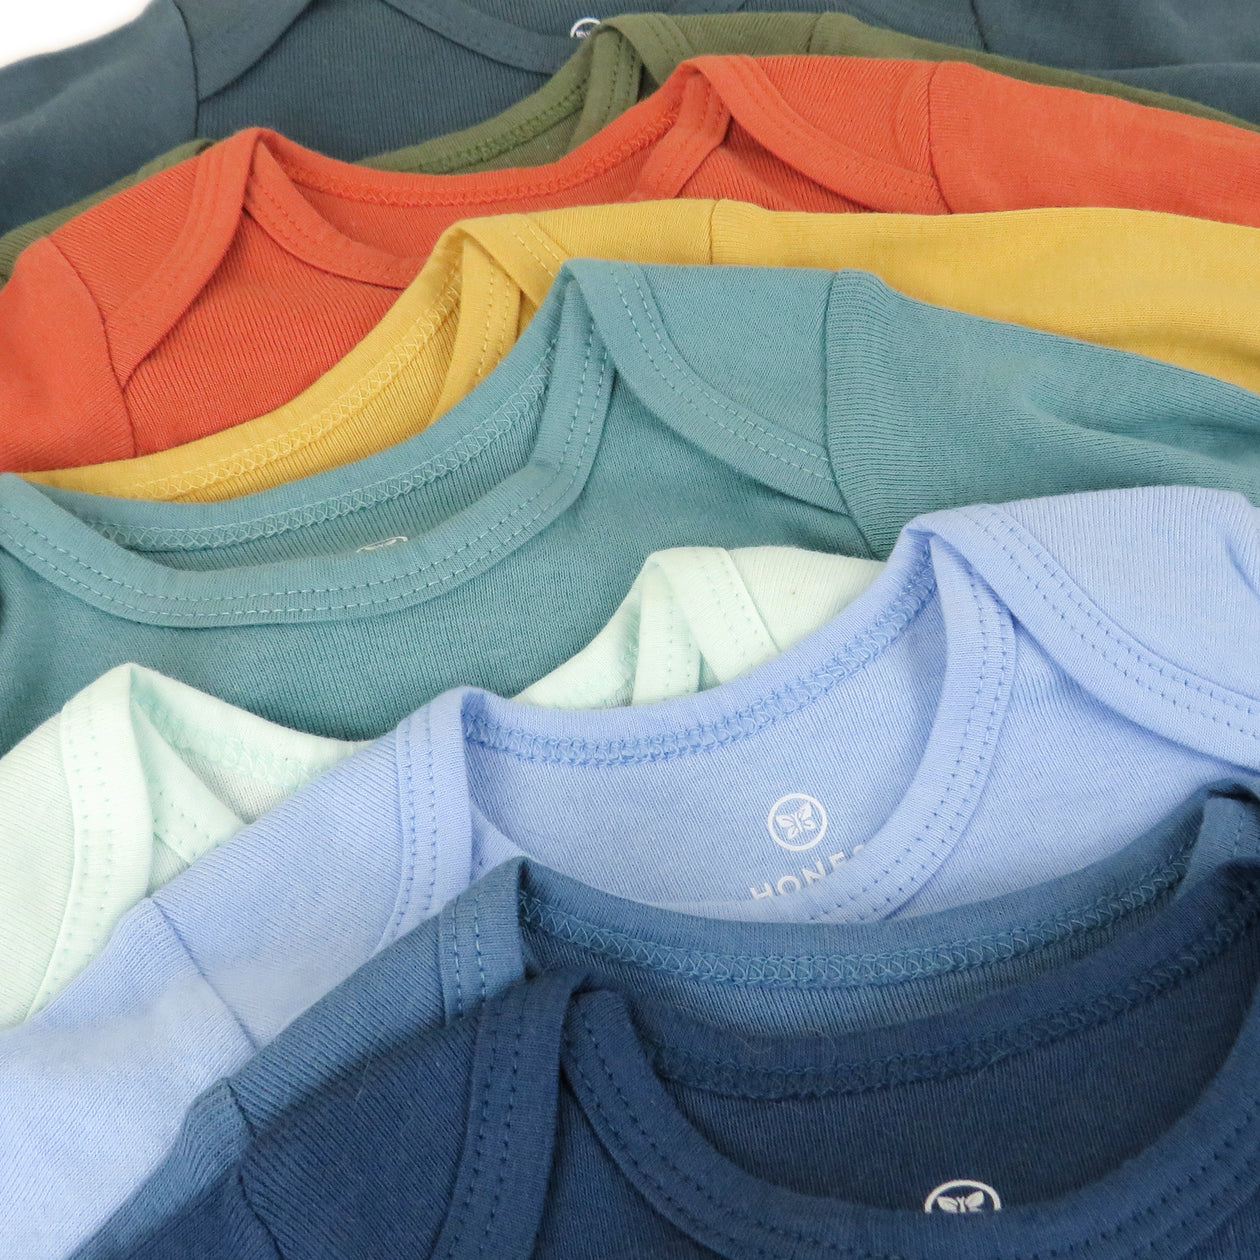 10-pack Organic Cotton Short Sleeve Bodysuits